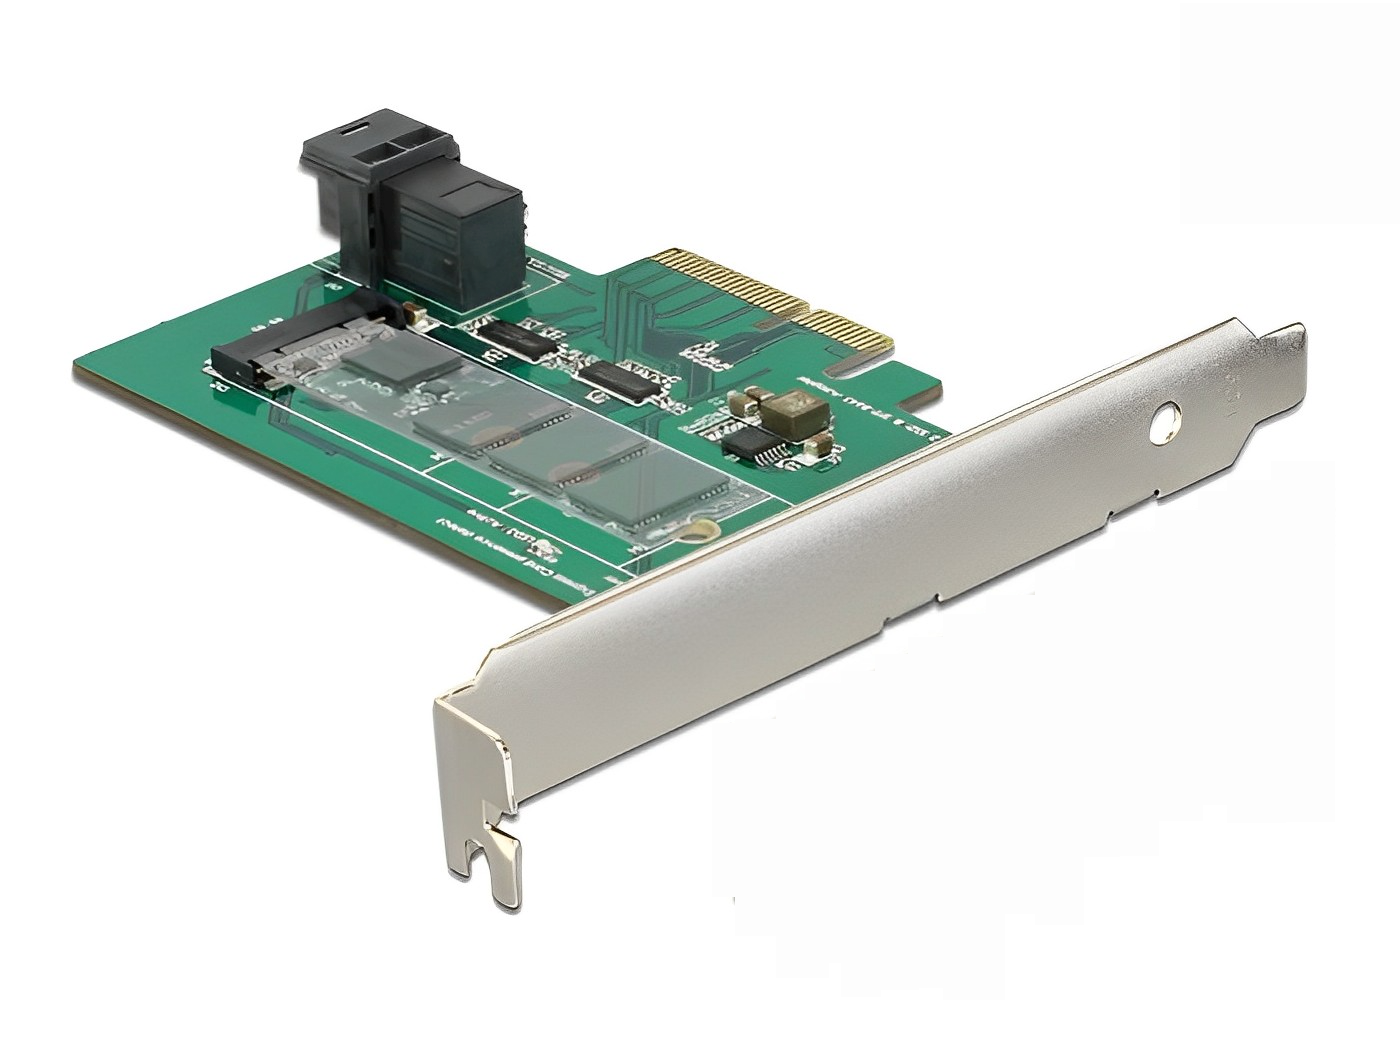 כרטיס PCIe x4 Low profile עבור כונן NVMe M.2 PCIe + יציאת SFF-8643 NVMe - delock.israel